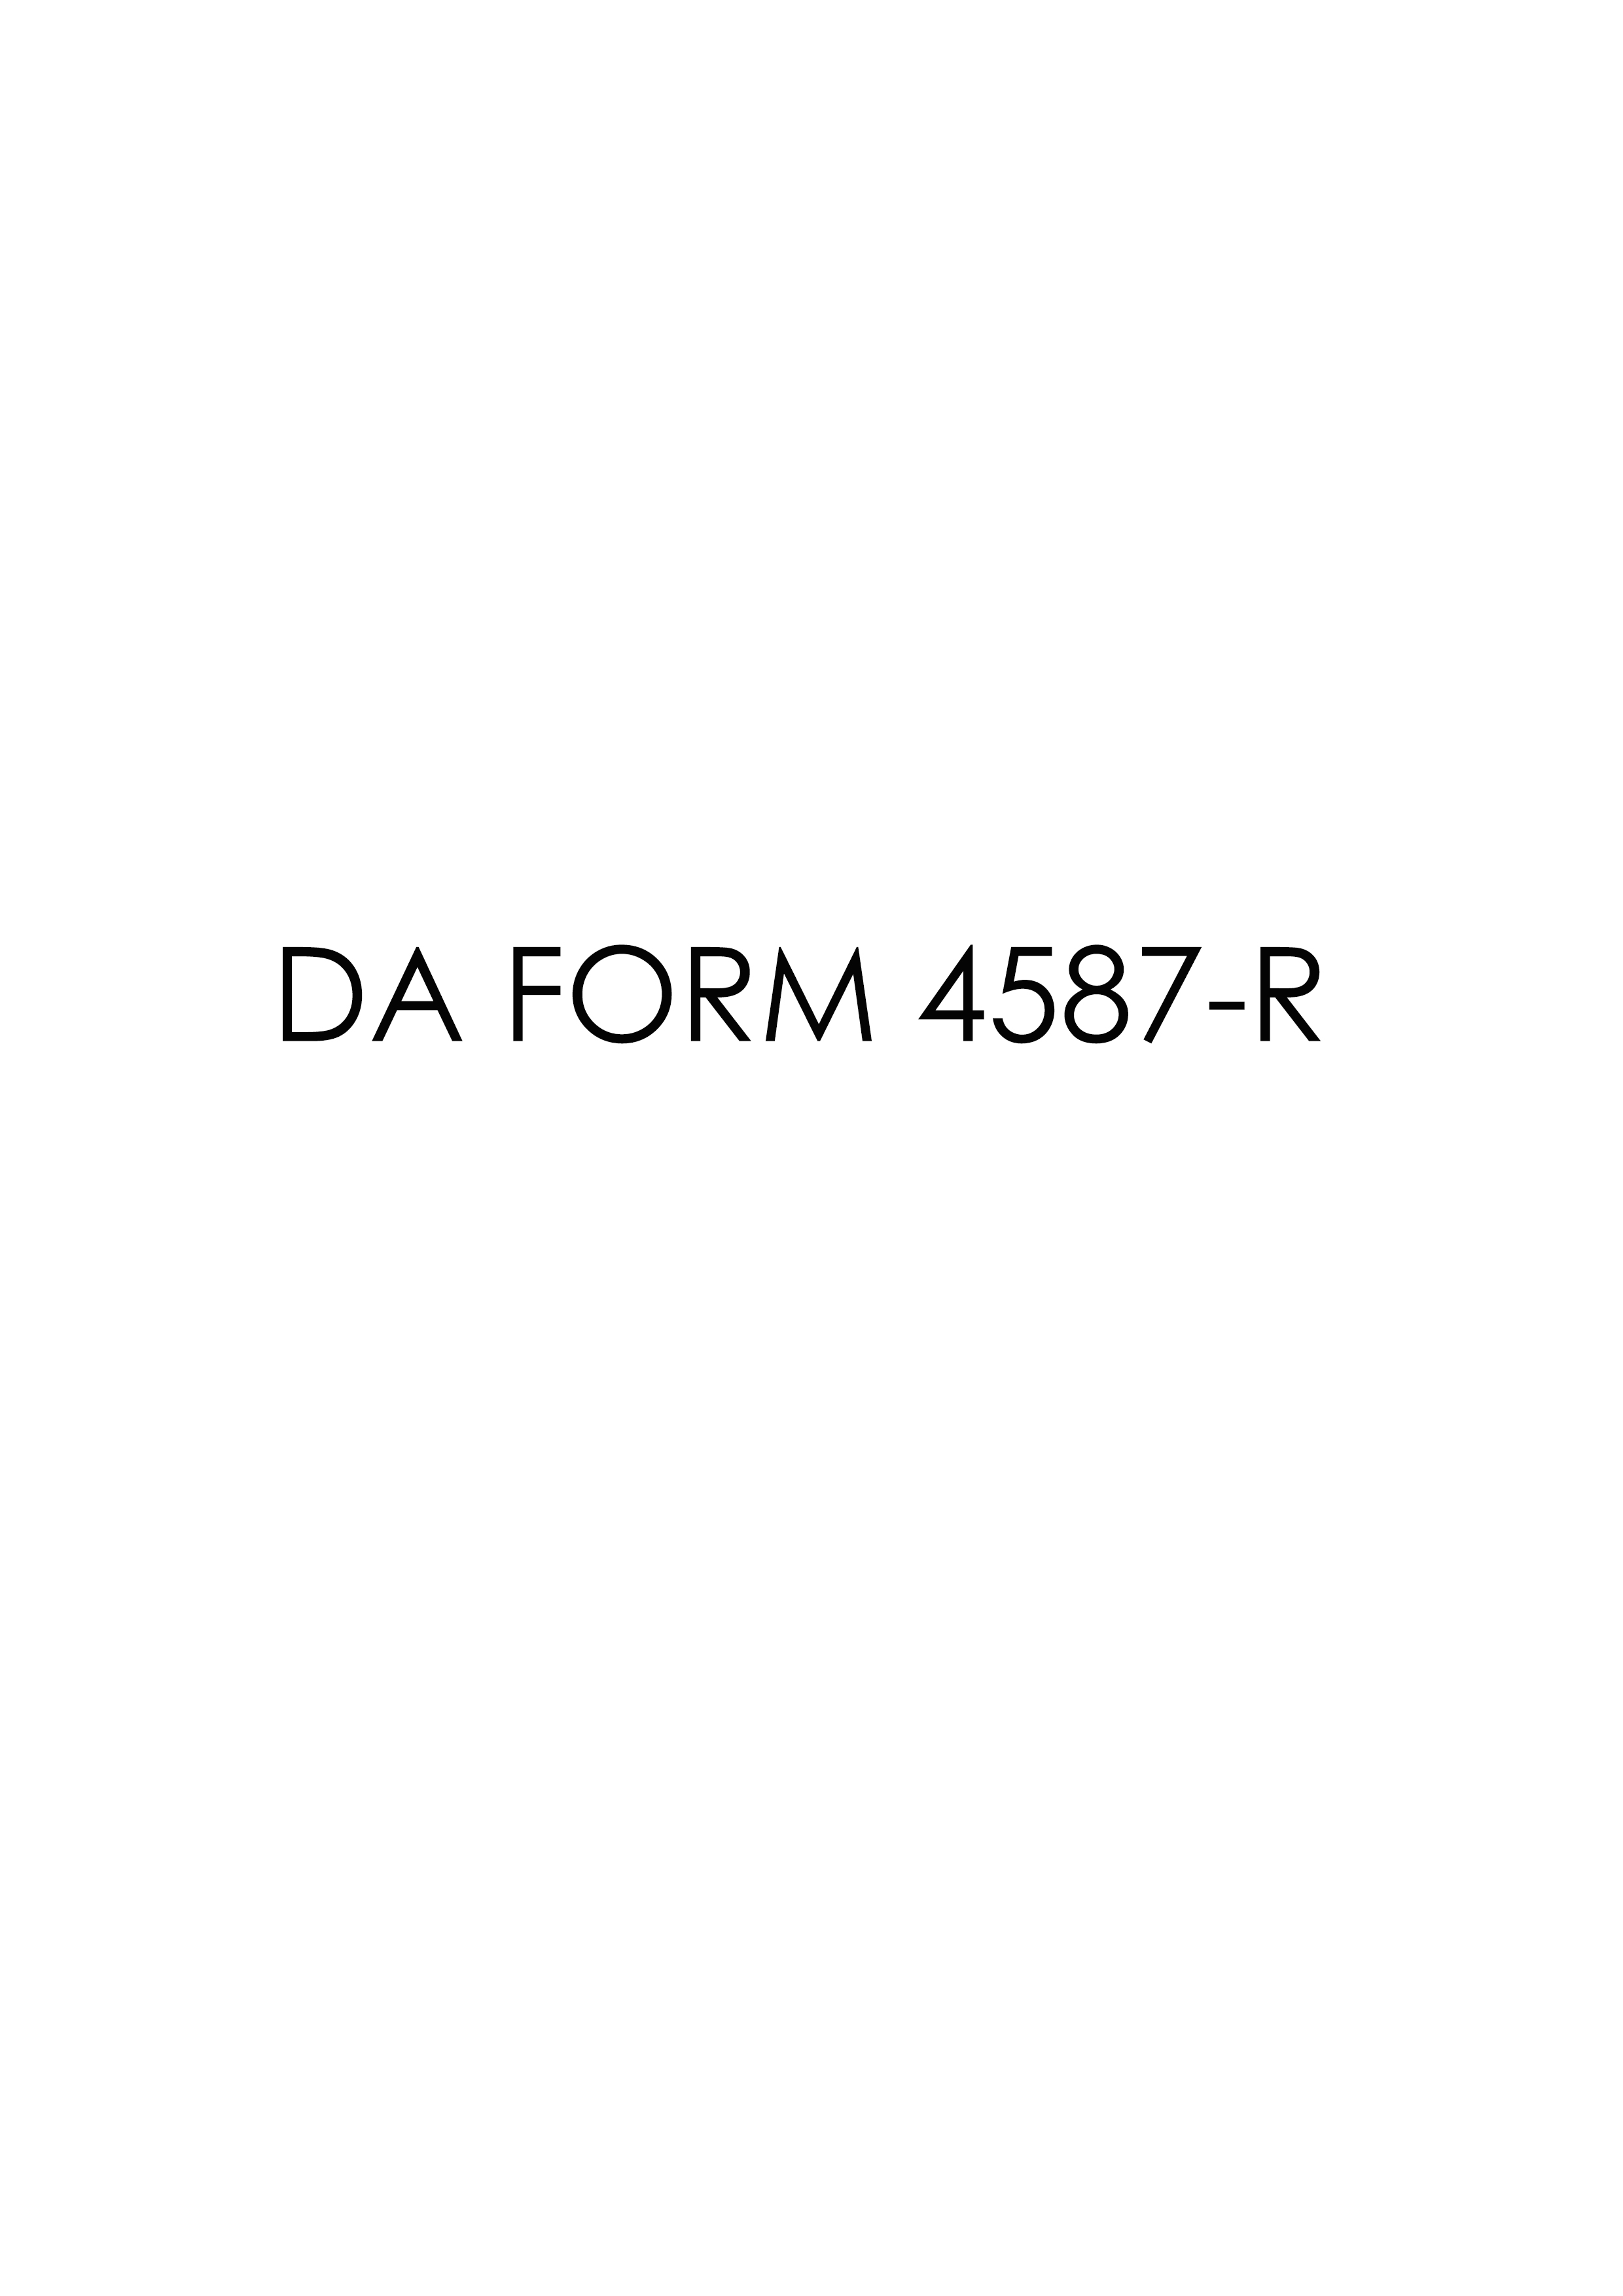 da Form 4587-R fillable